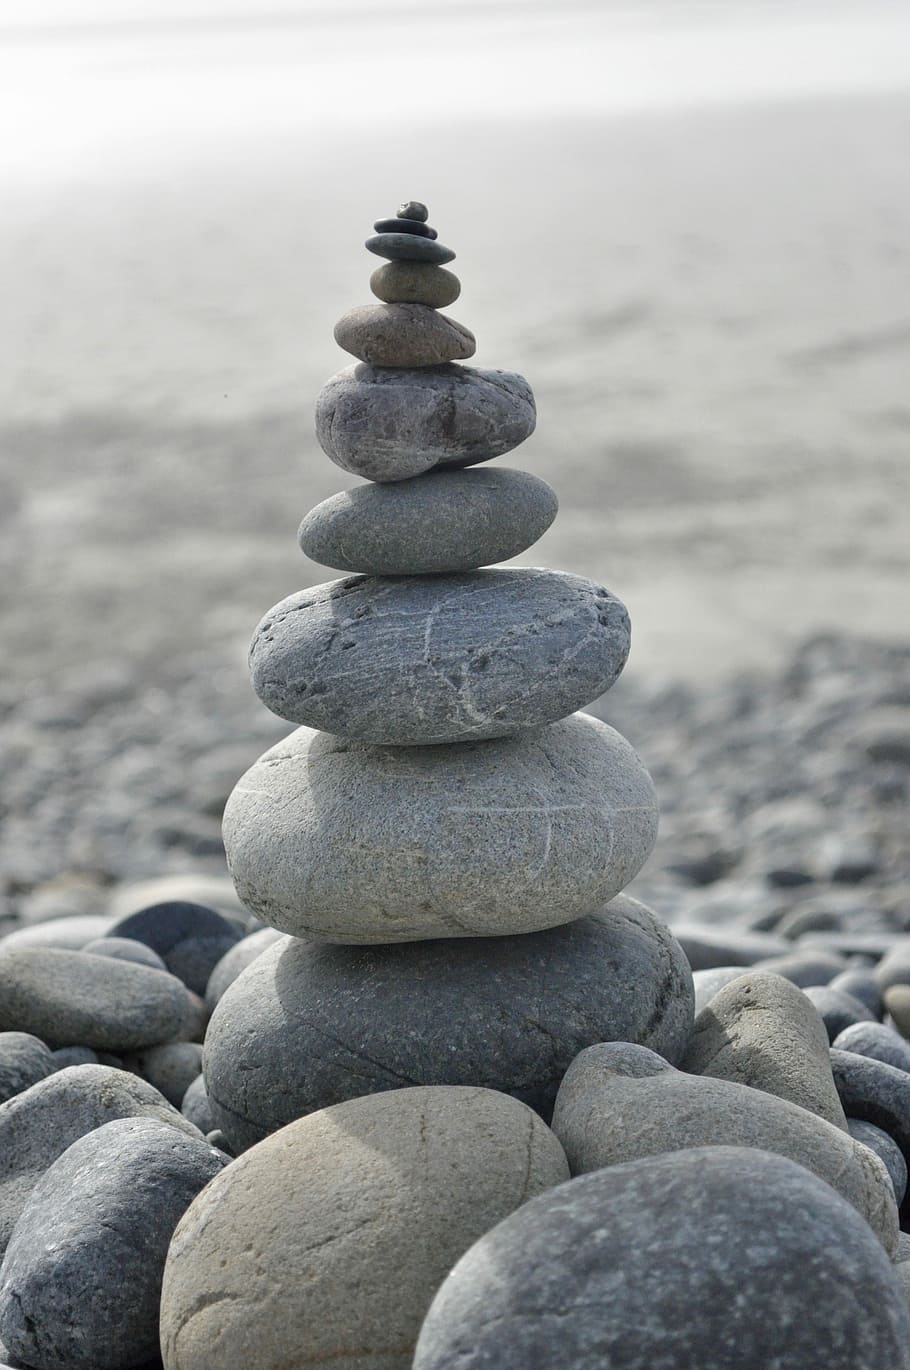 tumpukan kerikil, zen, stabilitas, keseimbangan, batu bulat, harmoni, meditasi, batu, ketertiban, halus